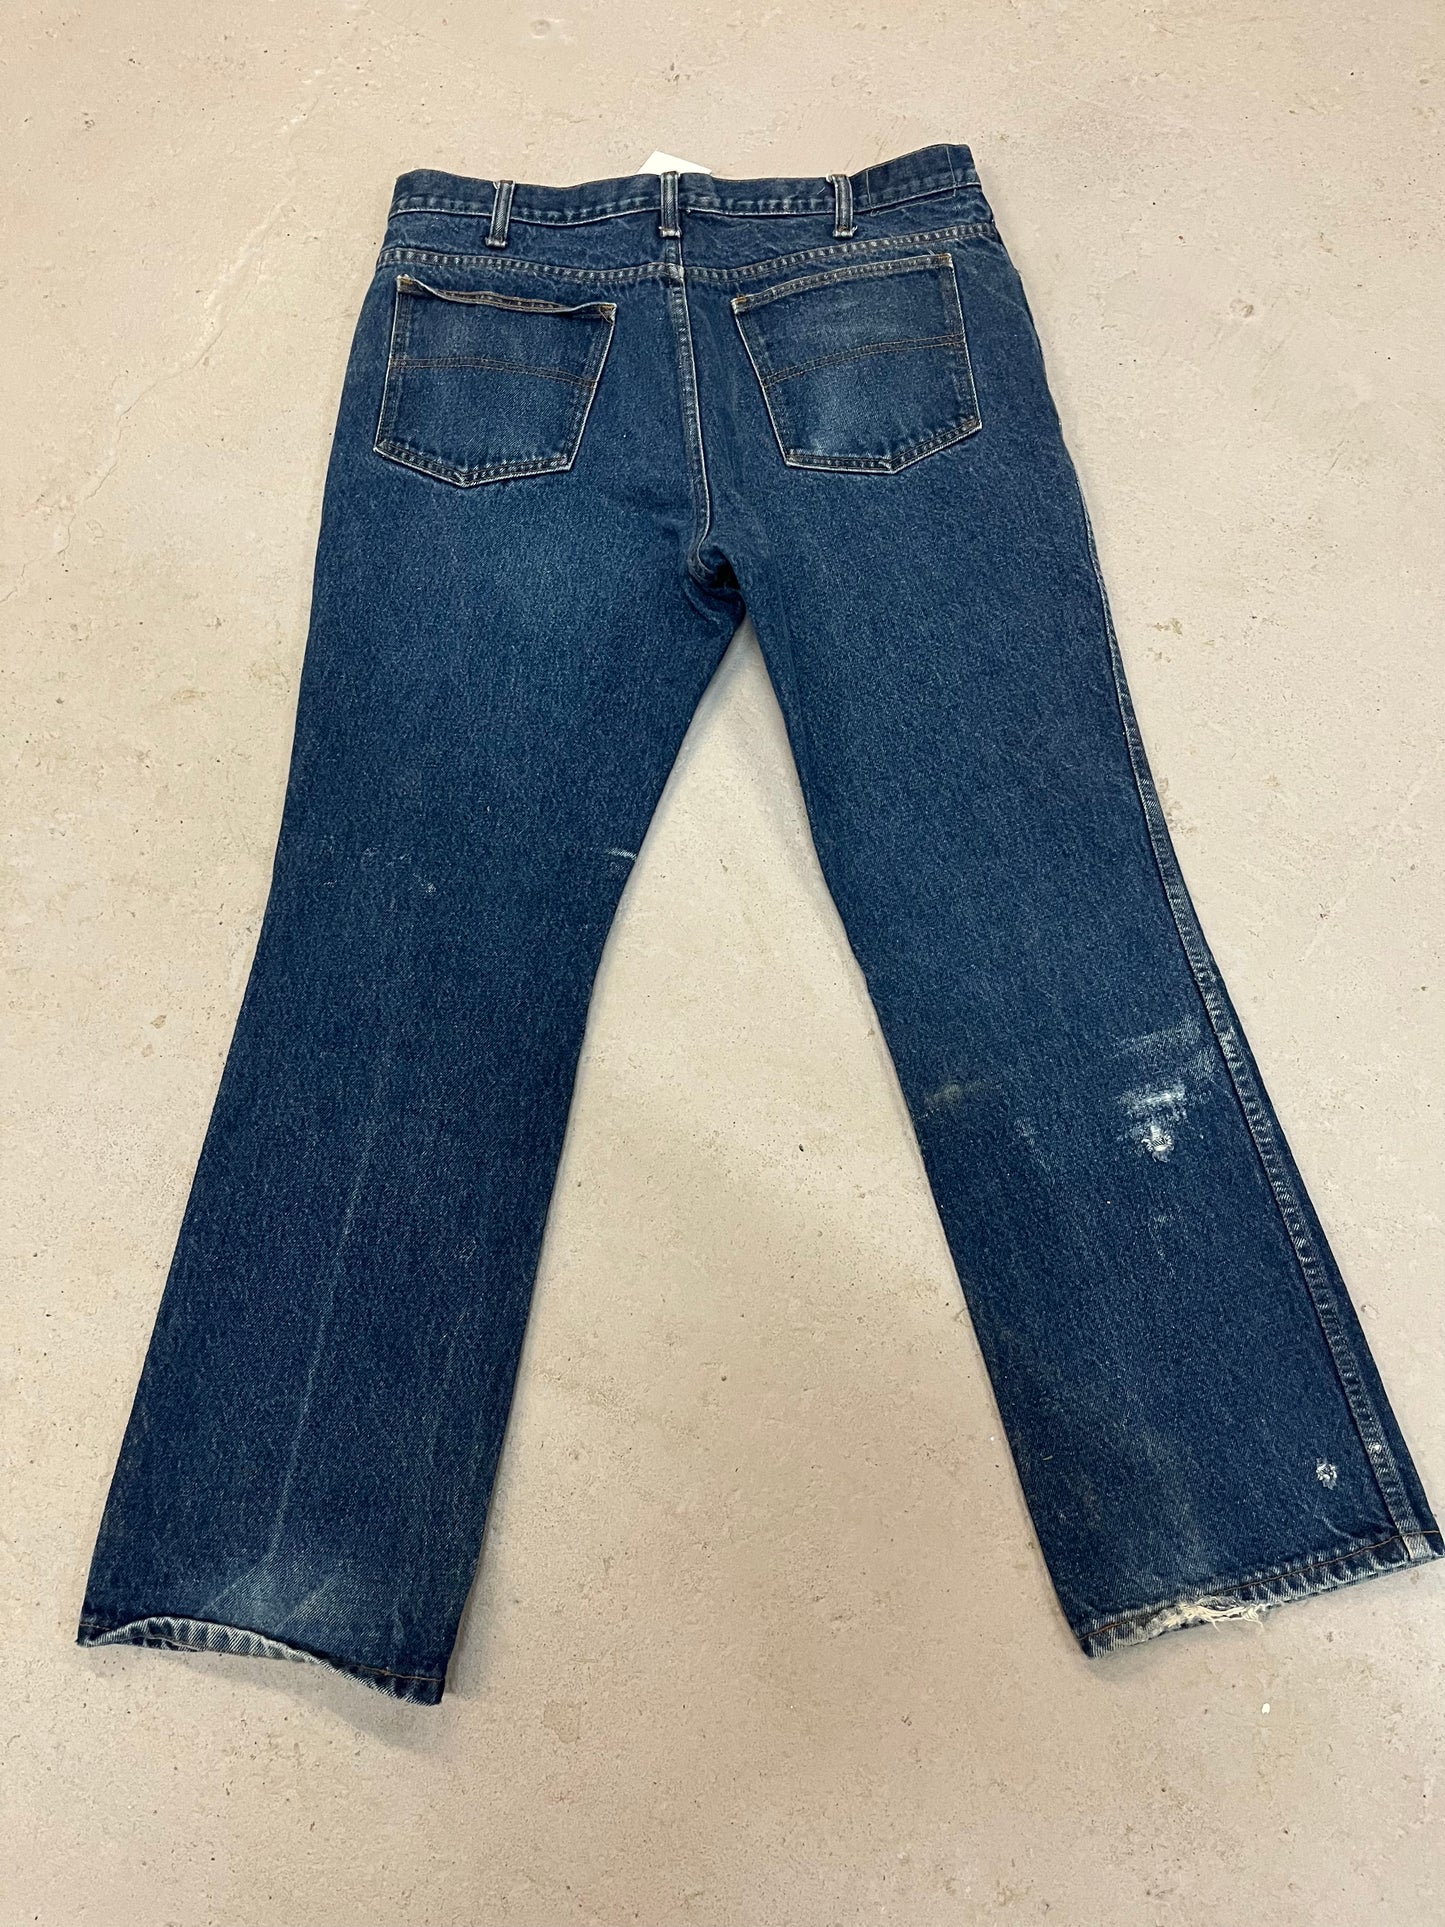 90’s Vintage Patched Distressed Dark Wash Jeans / 37 Waist